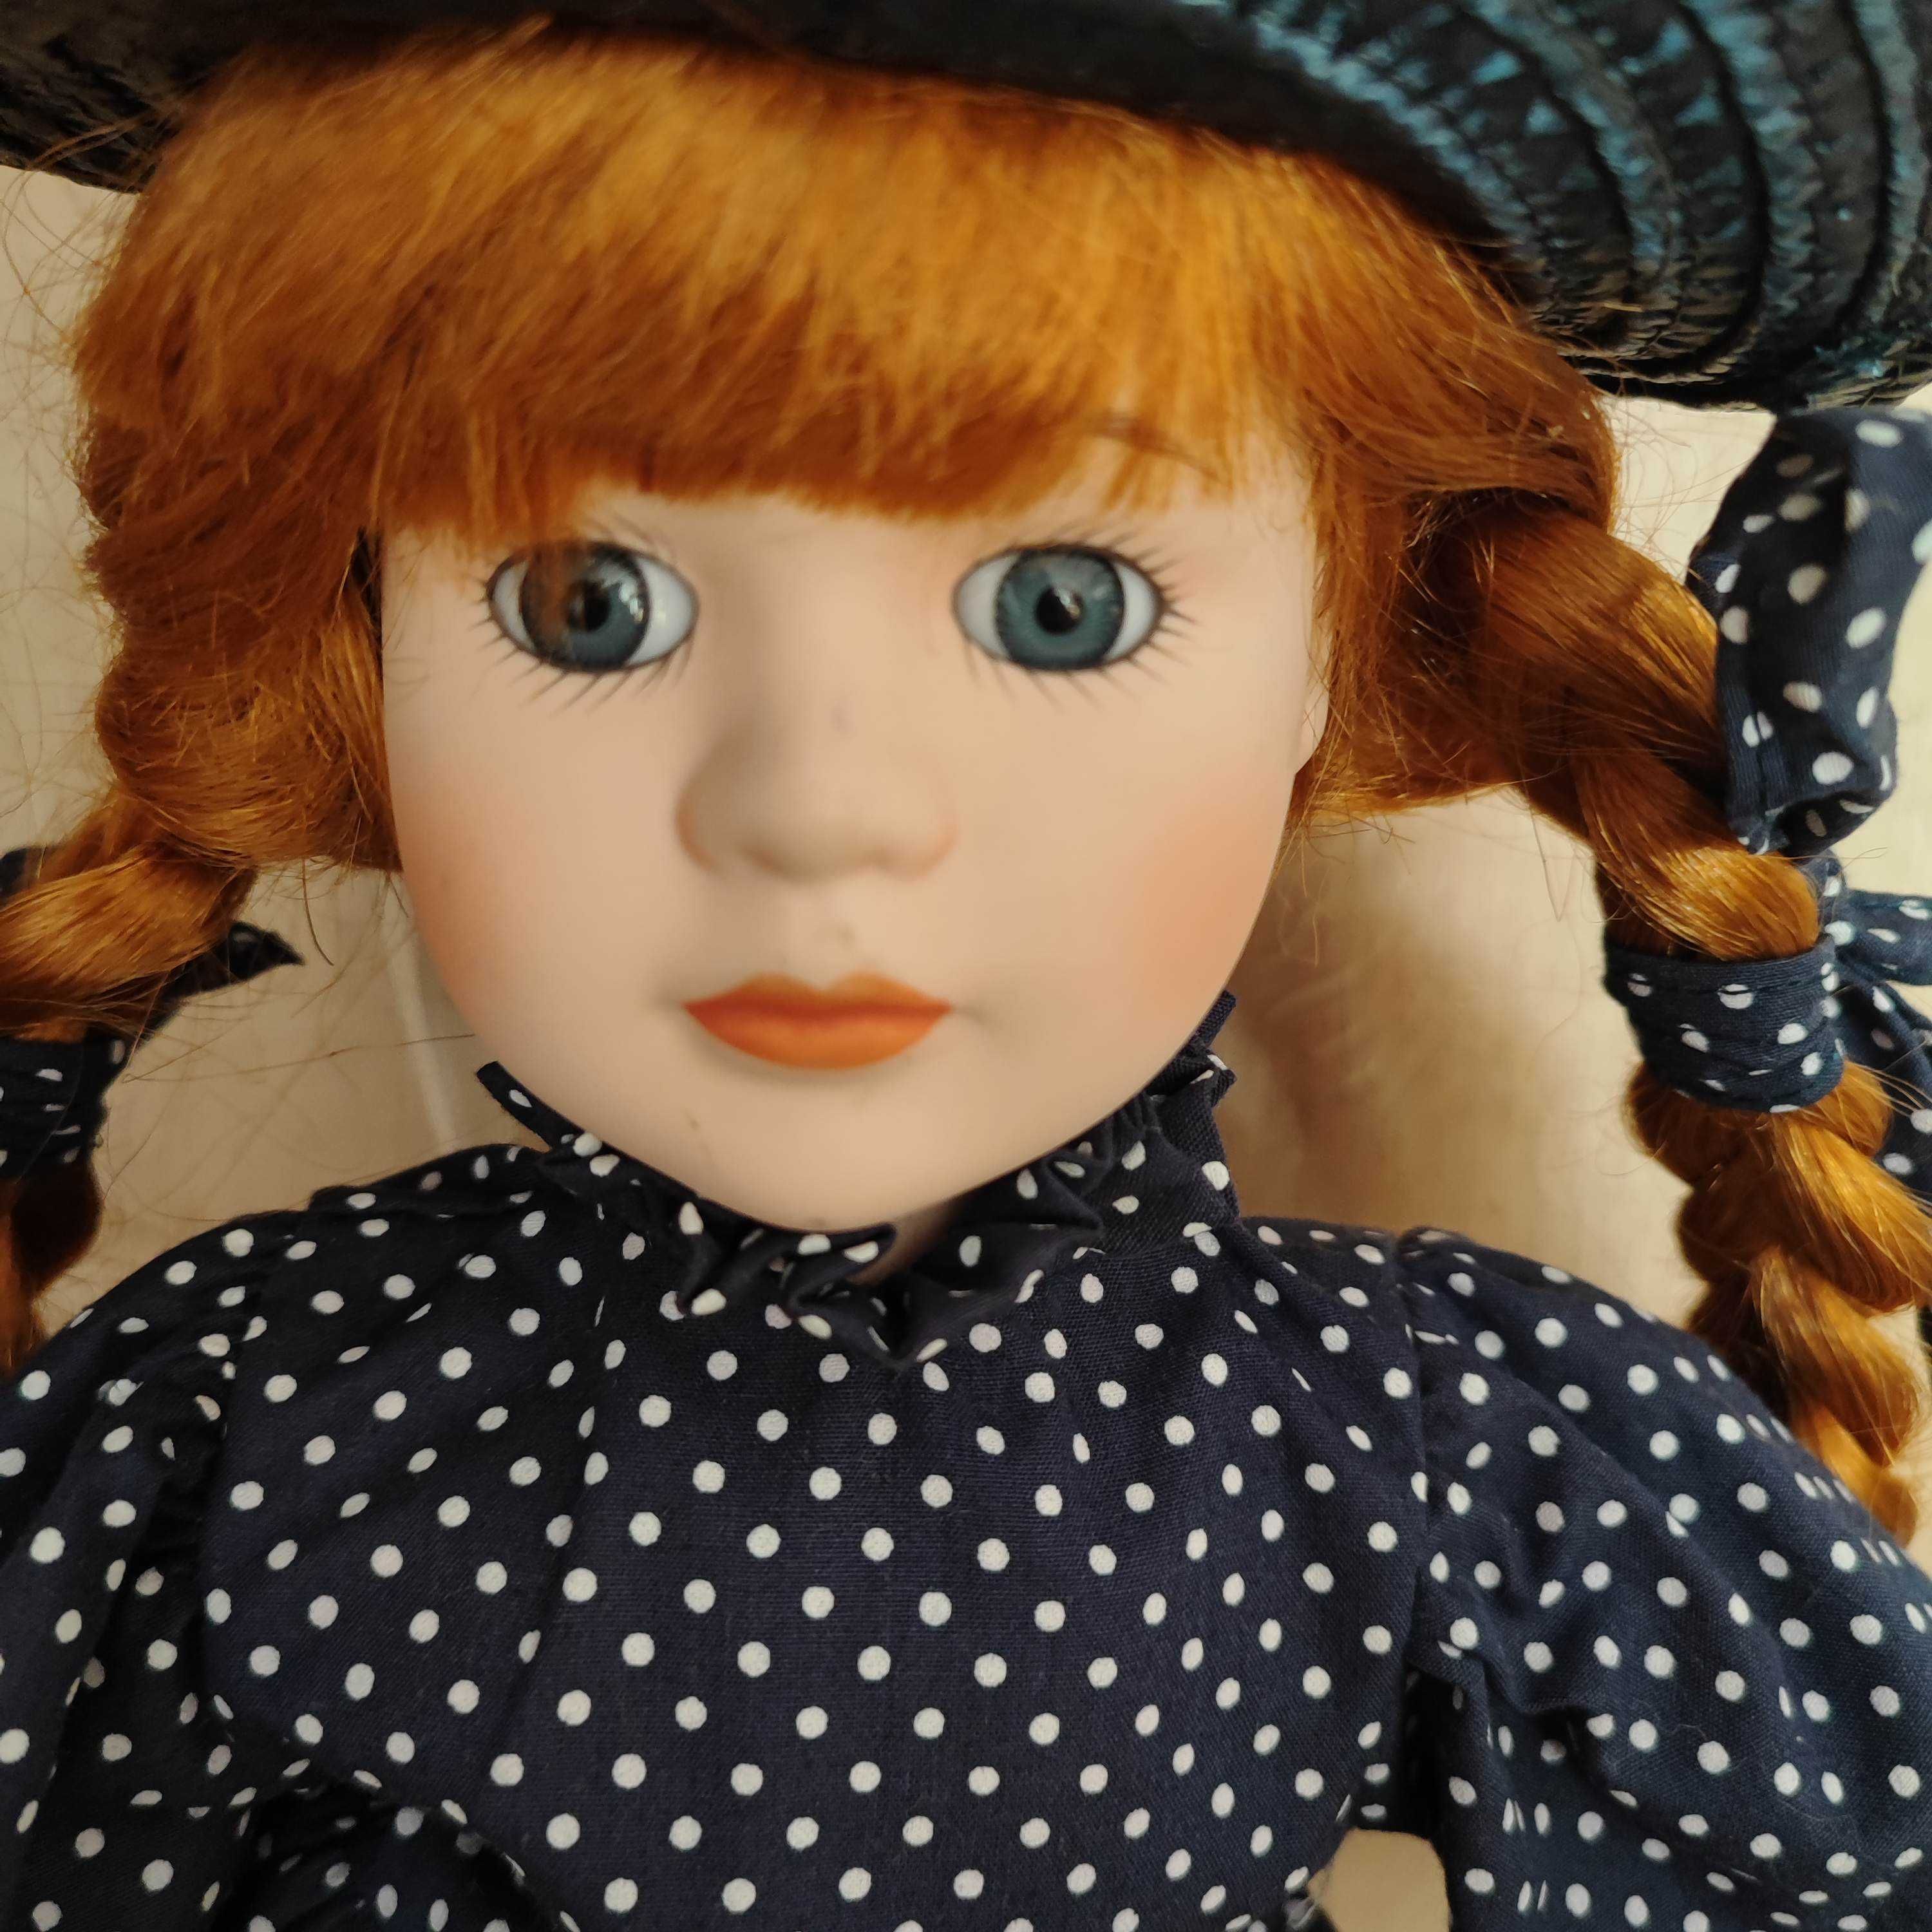 PROMENADE COLLECTION Lalka kolekcjonerska (collectible porcelain doll)